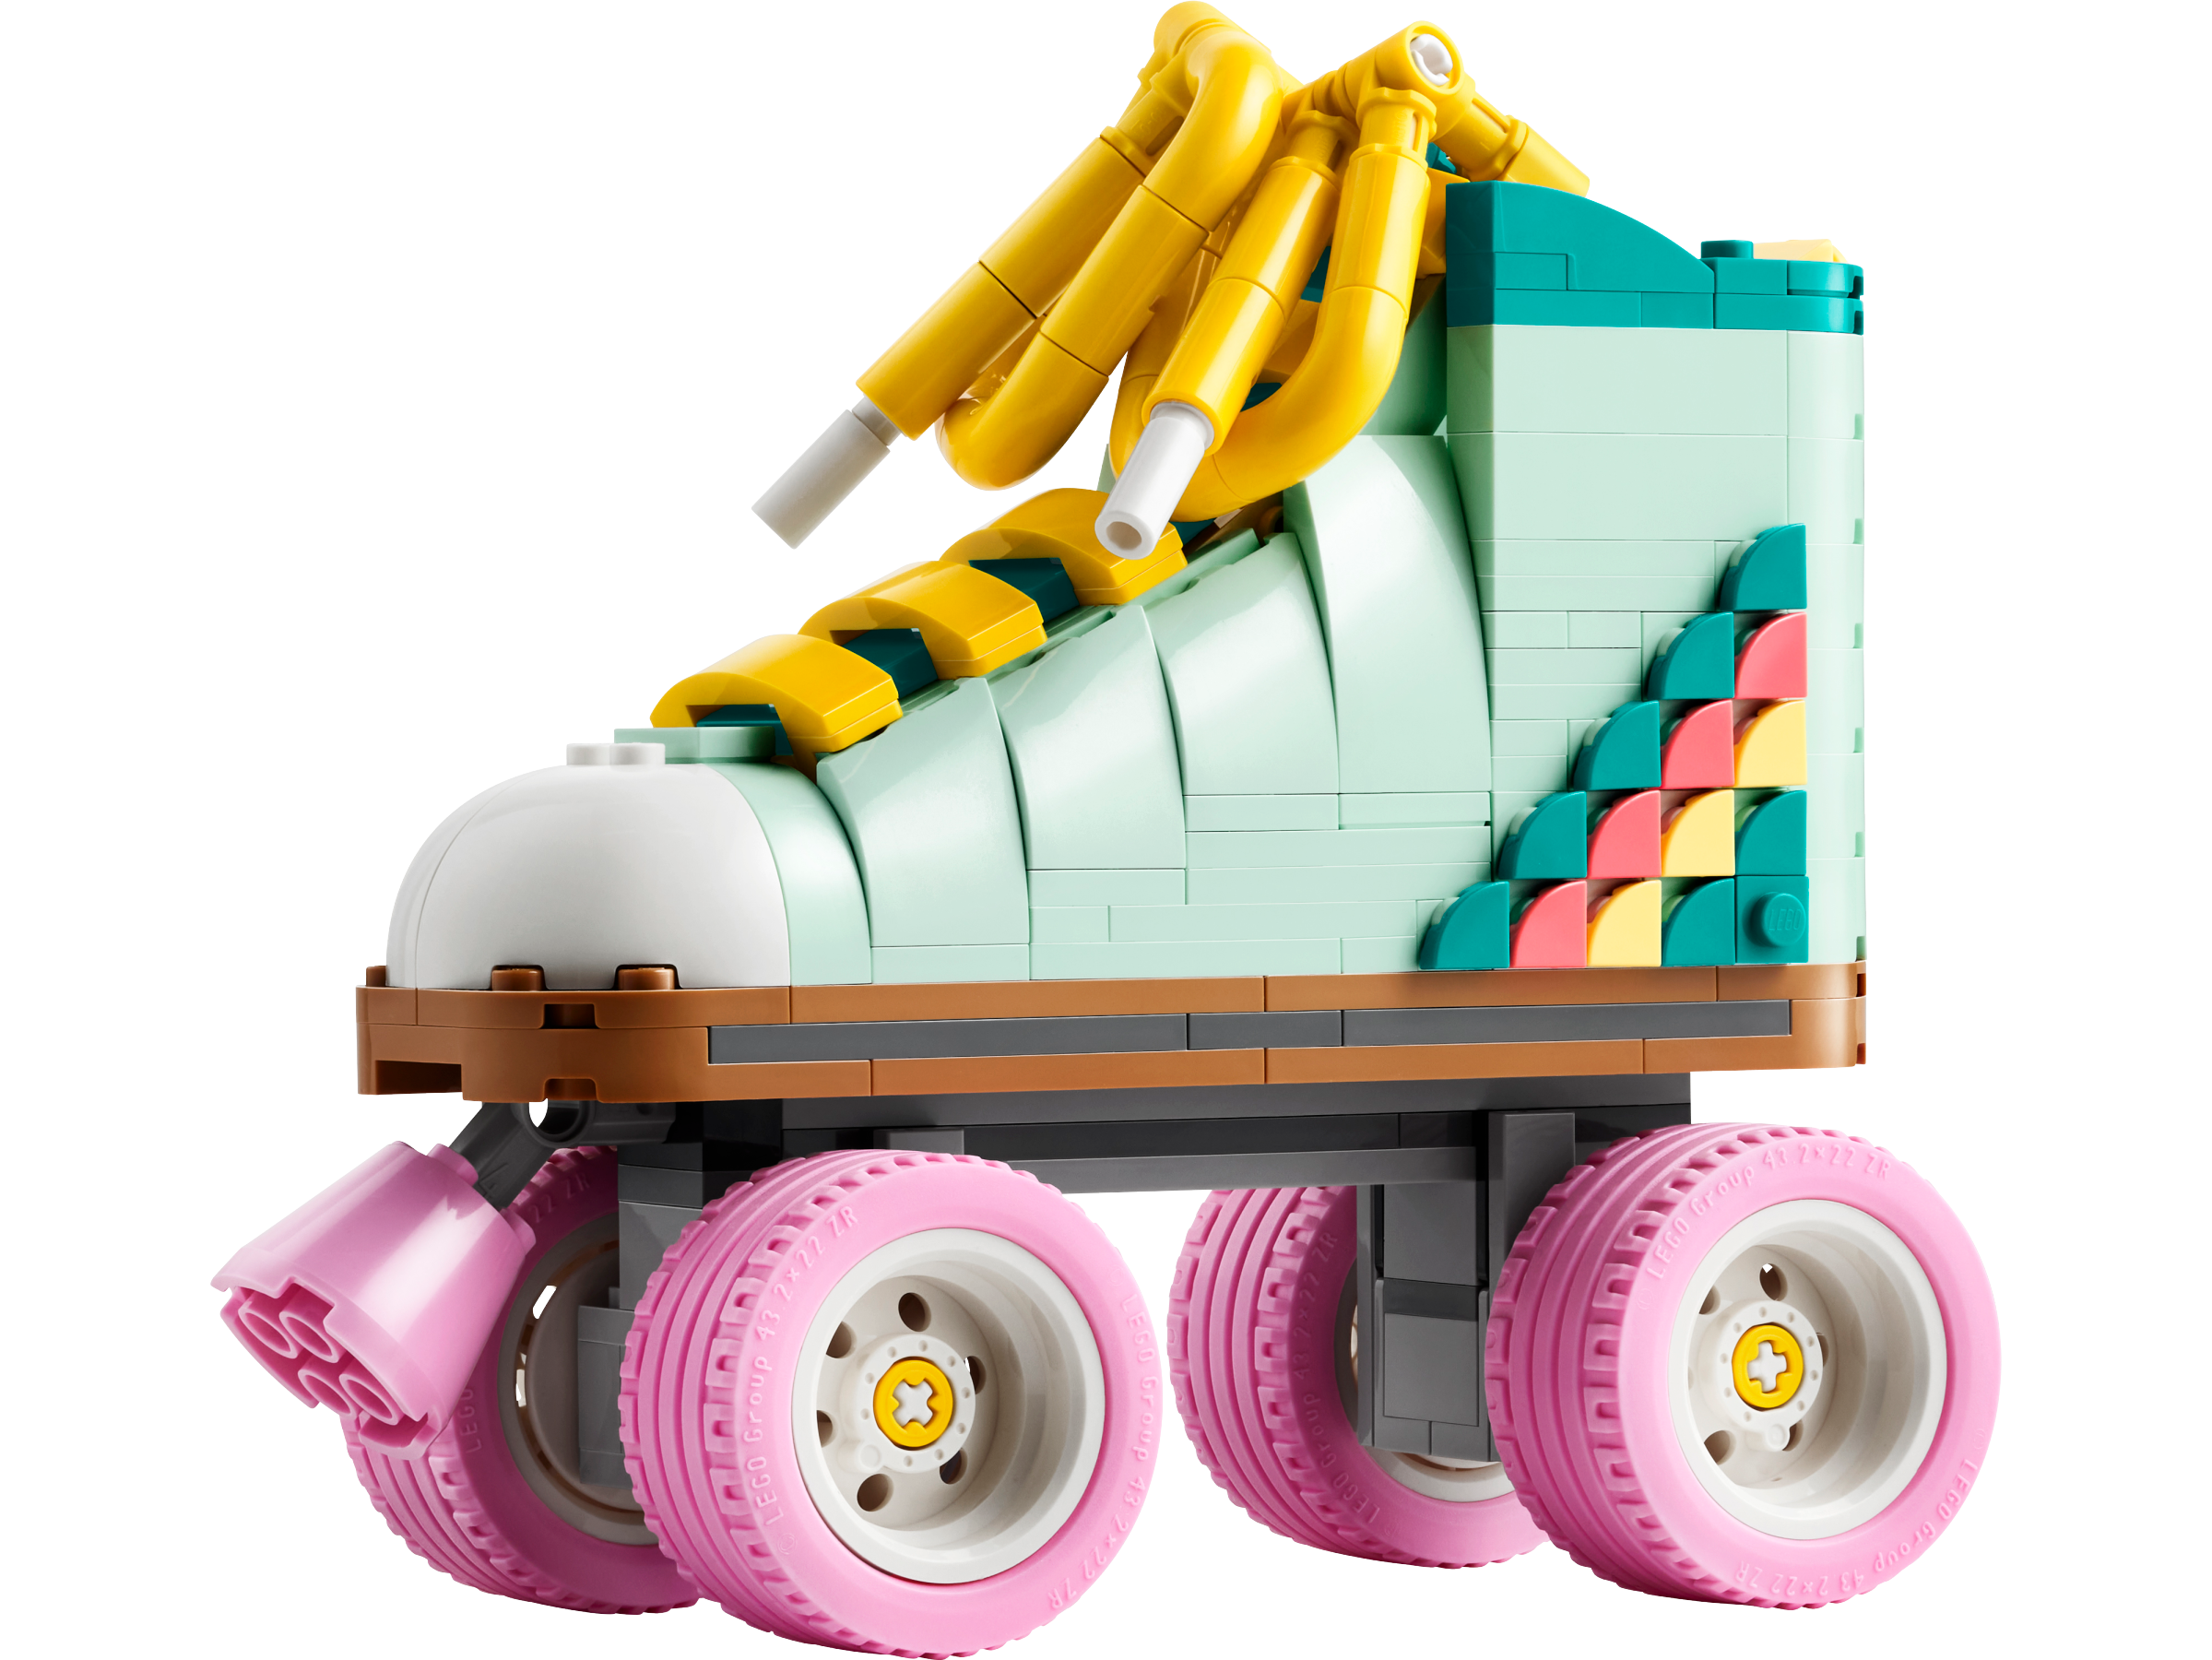 Lego 31148 Retro Roller Skate